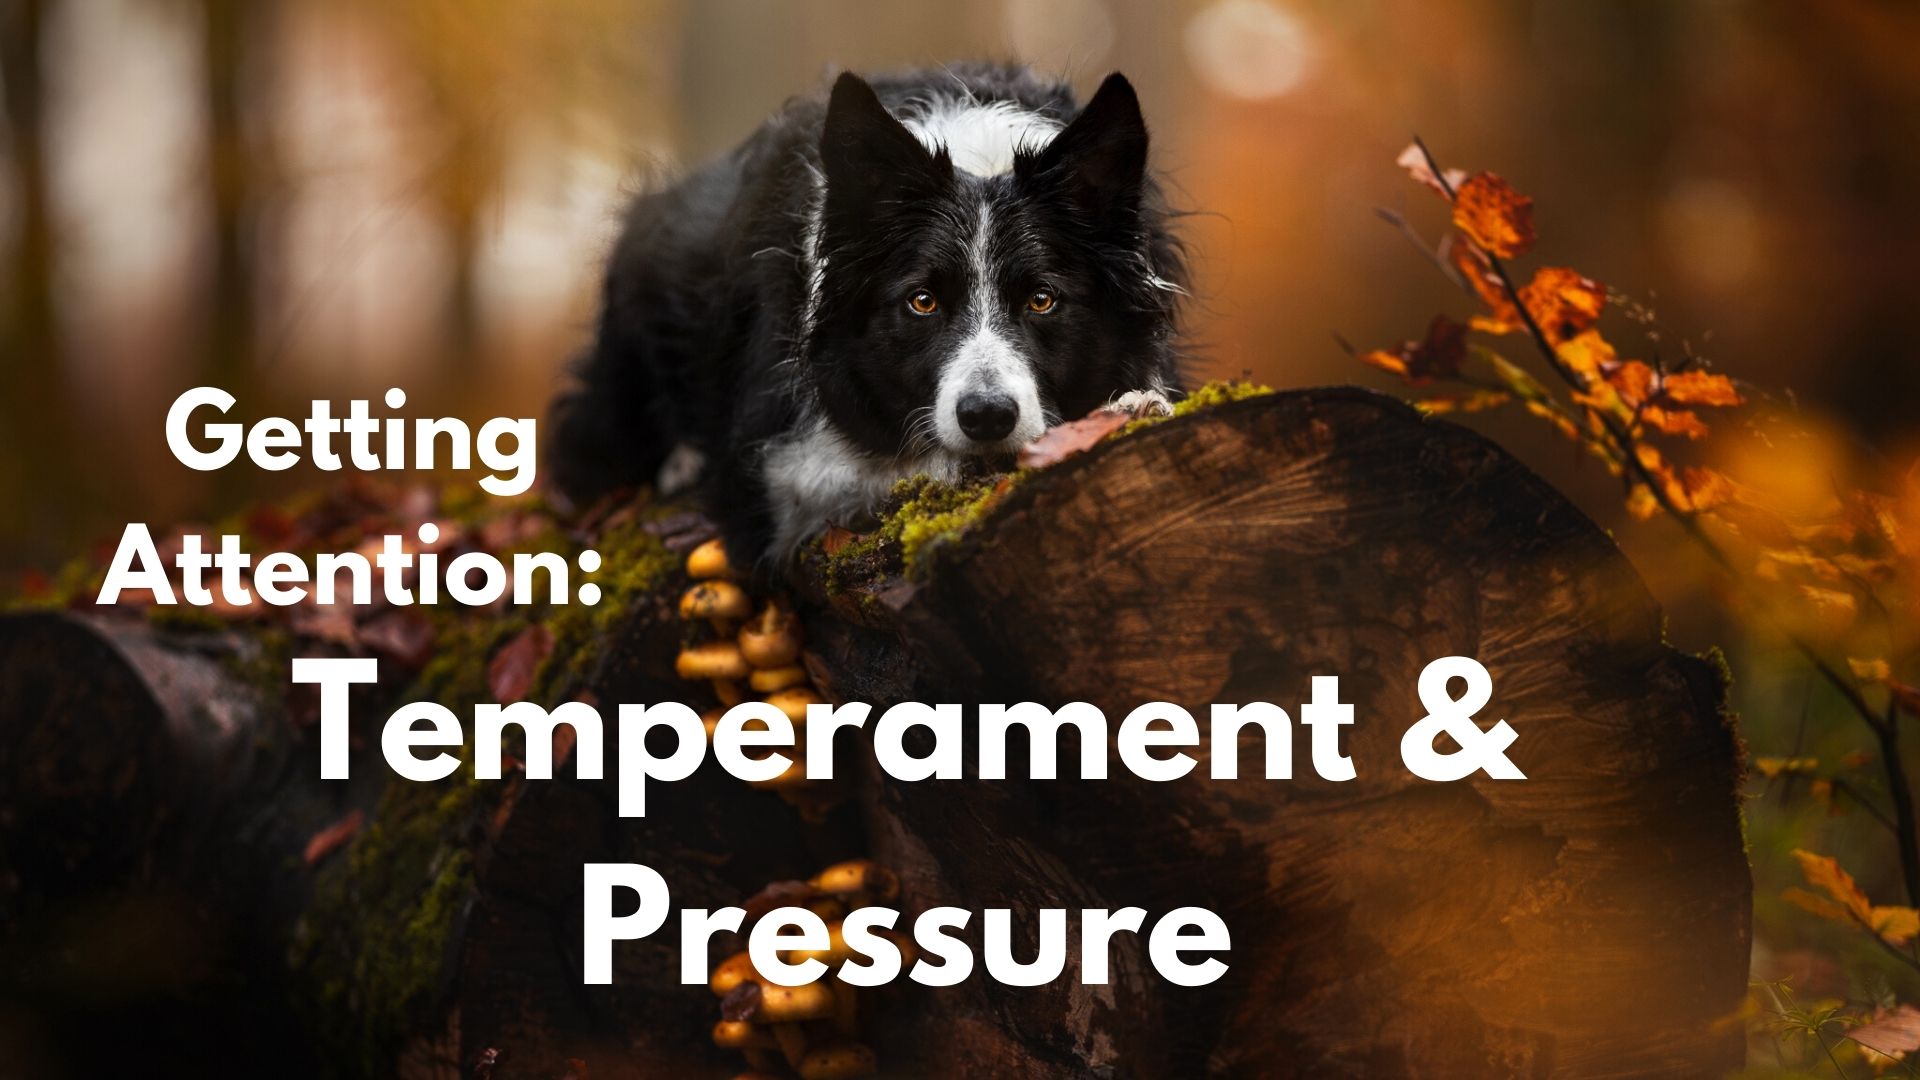 Getting Attention: Temperament & Pressure